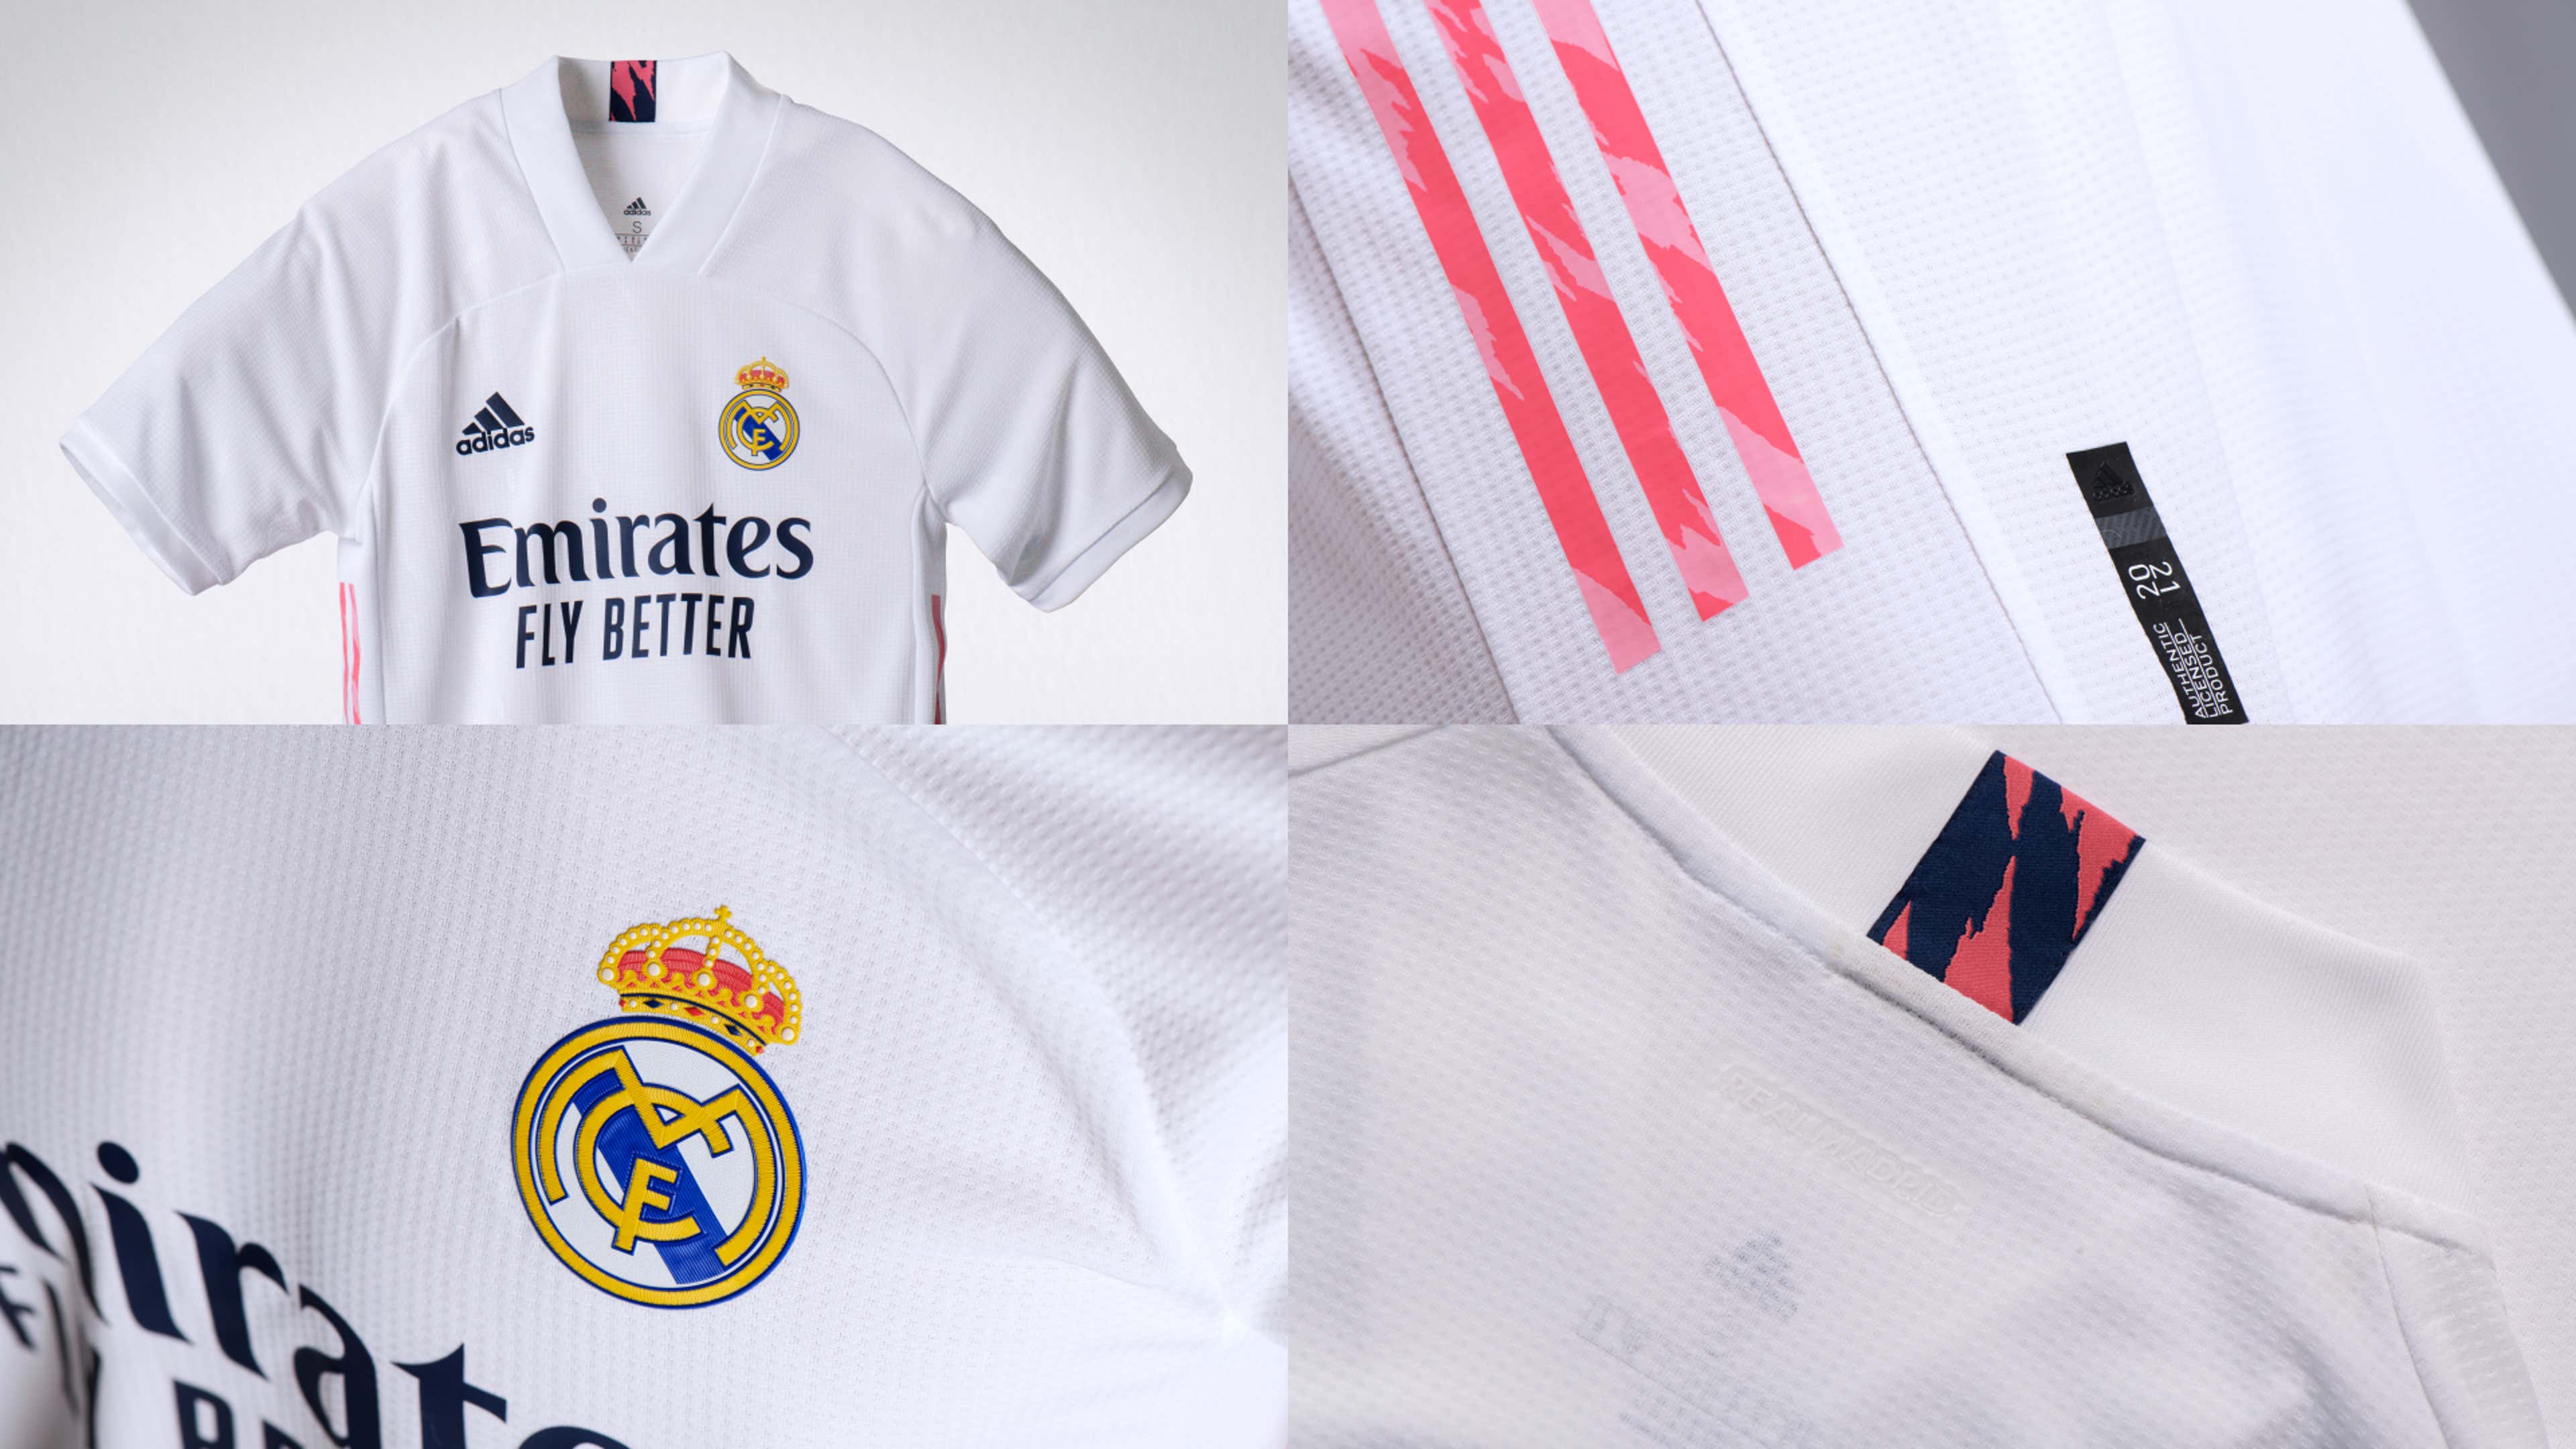 Compra Camiseta Cristiano Ronaldo Real Madrid (Blanco) de niño